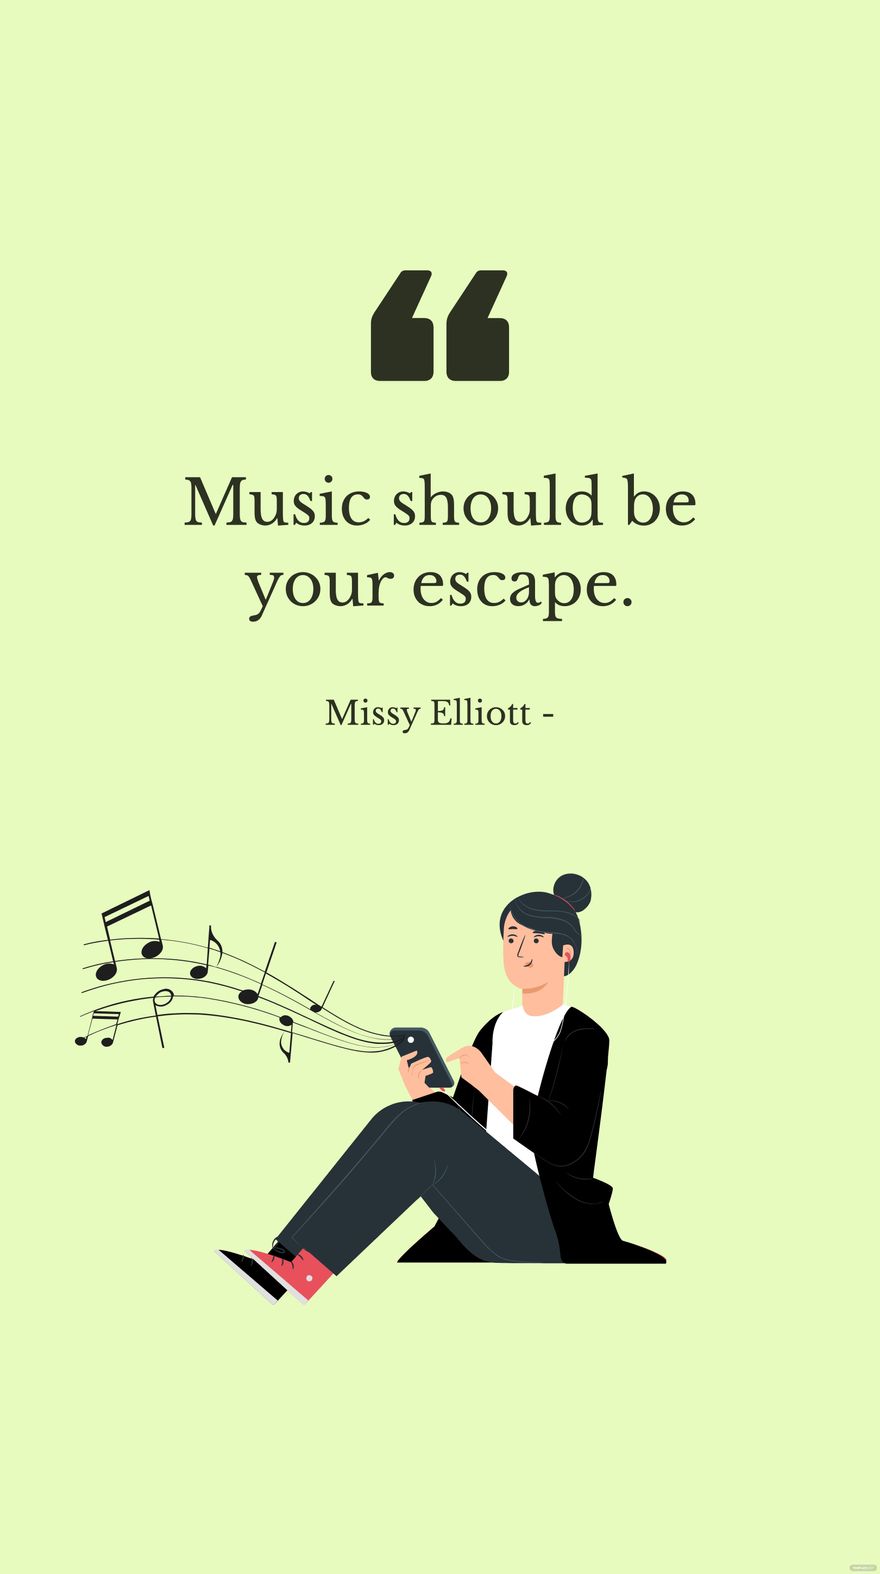 Free Missy Elliott - Music should be your escape. in JPG